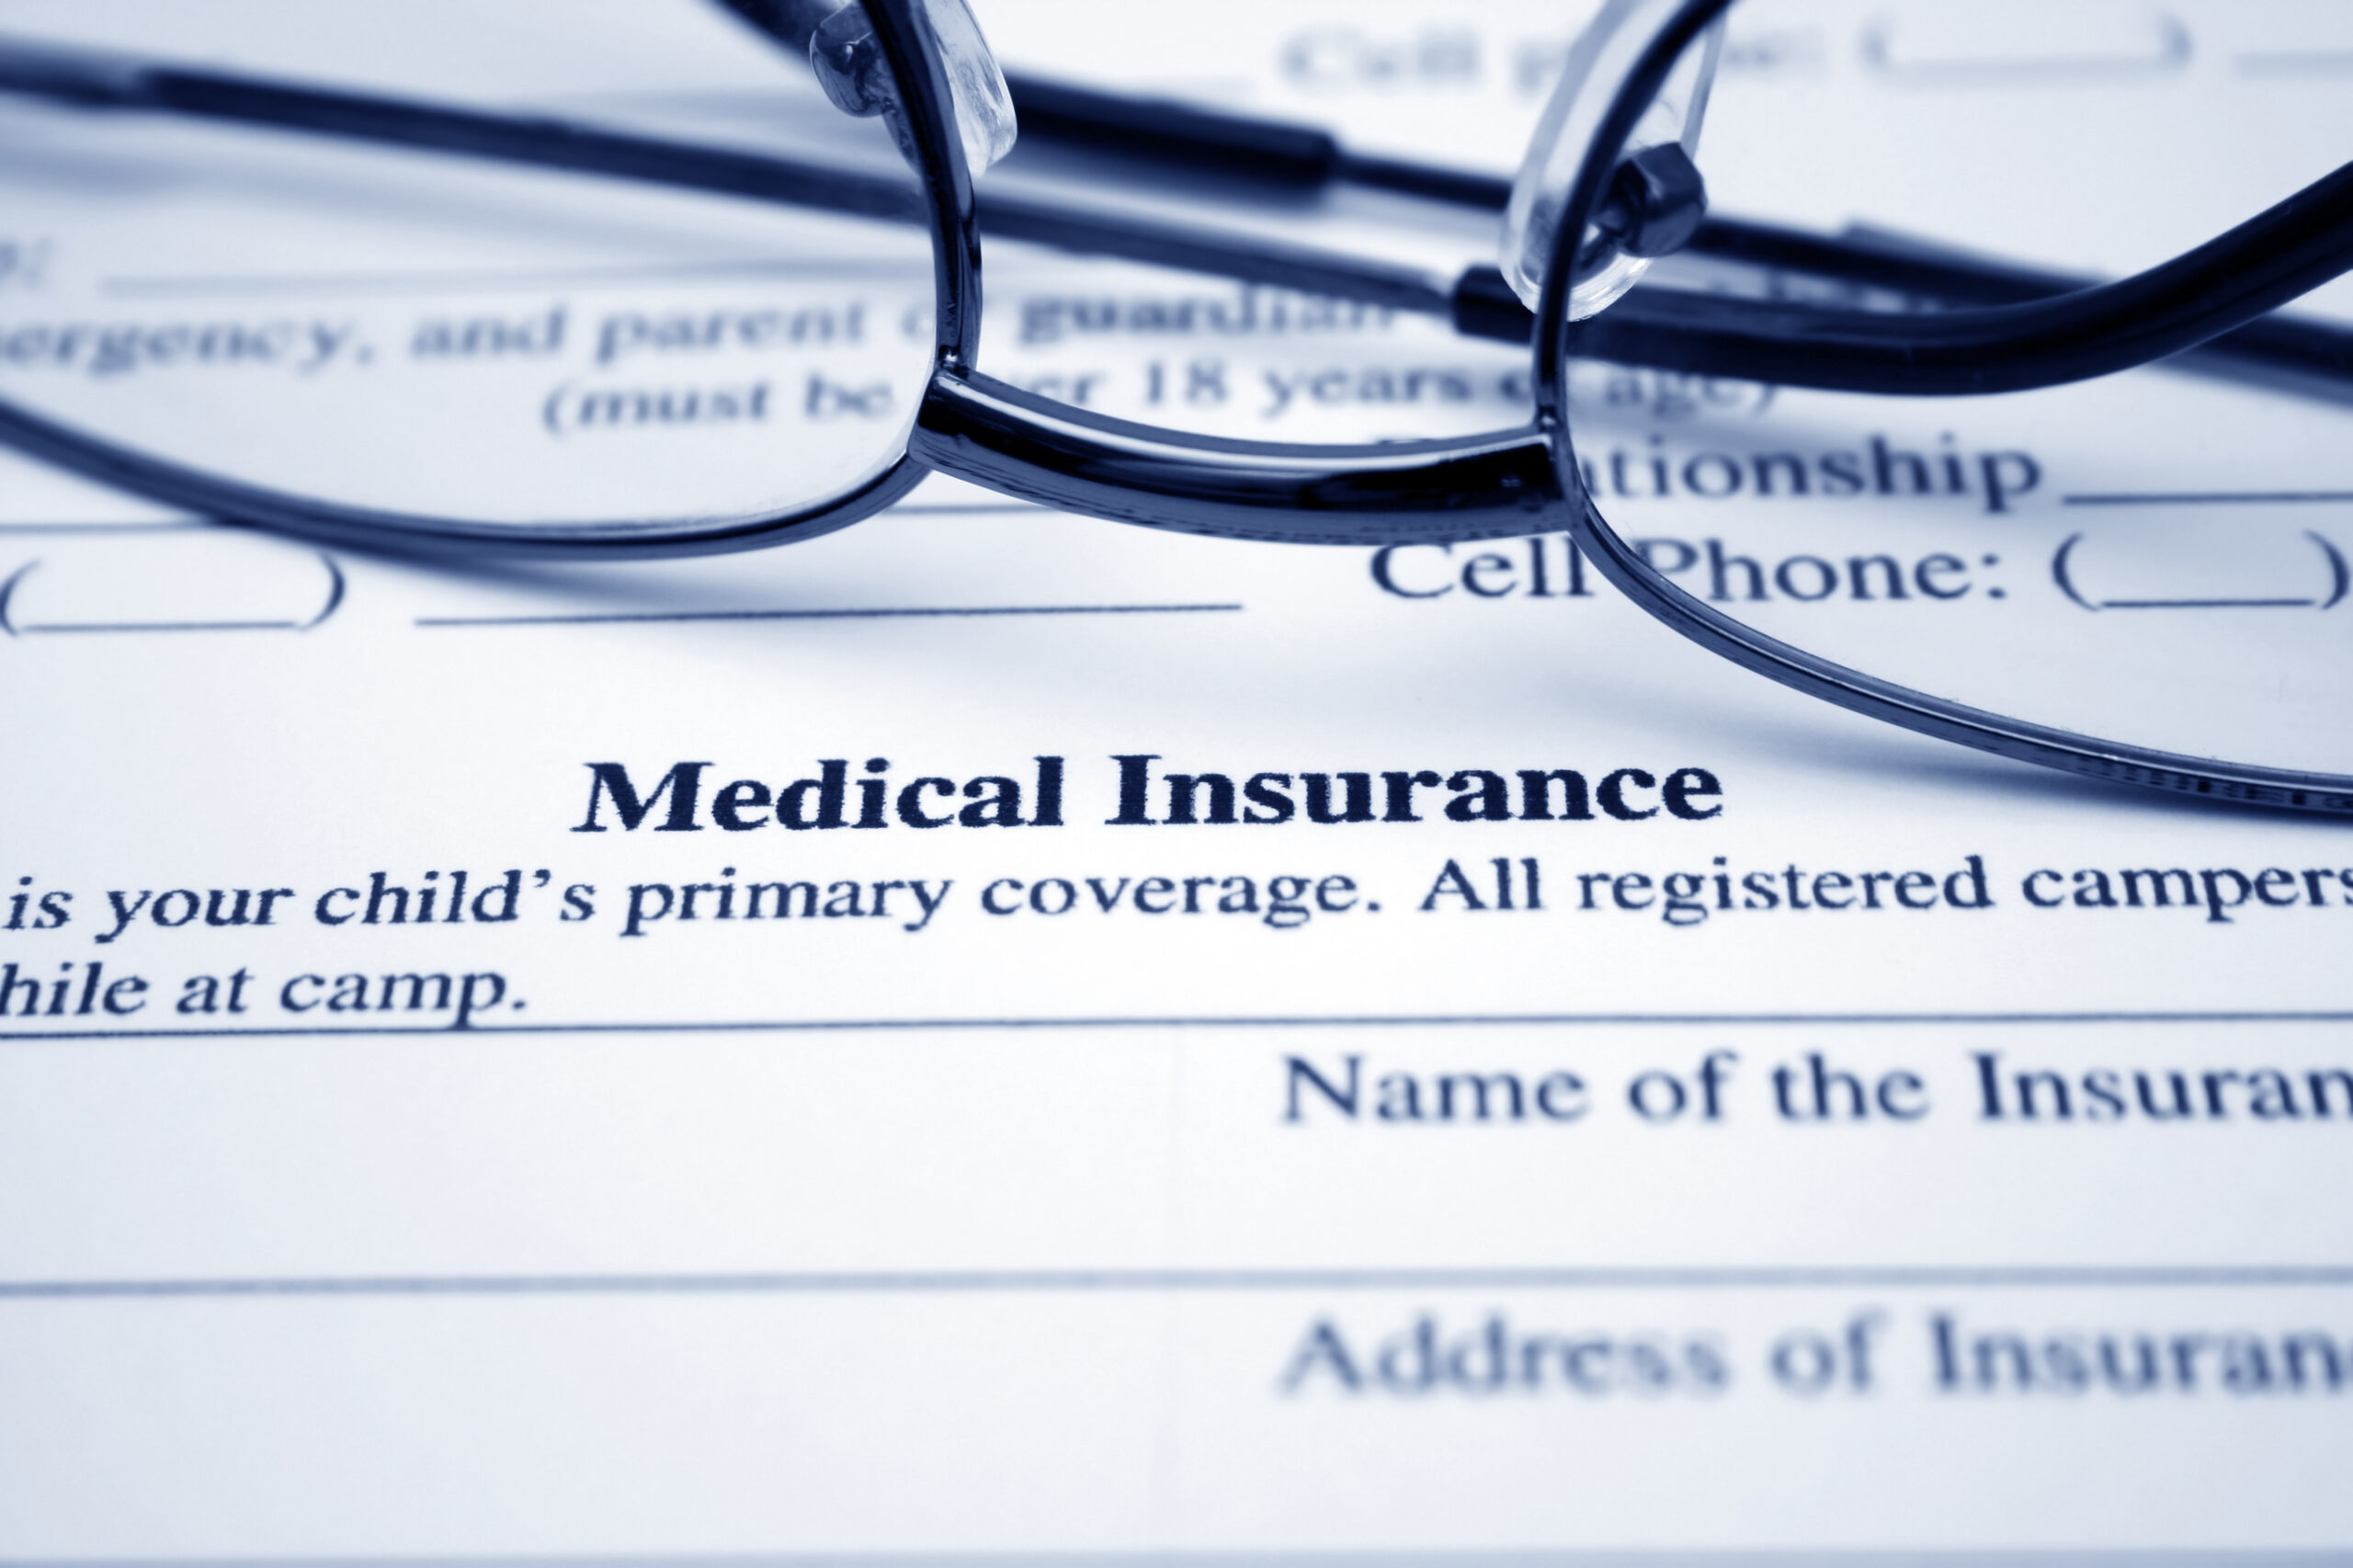 Image of glasses setting on medical insurance paperwork